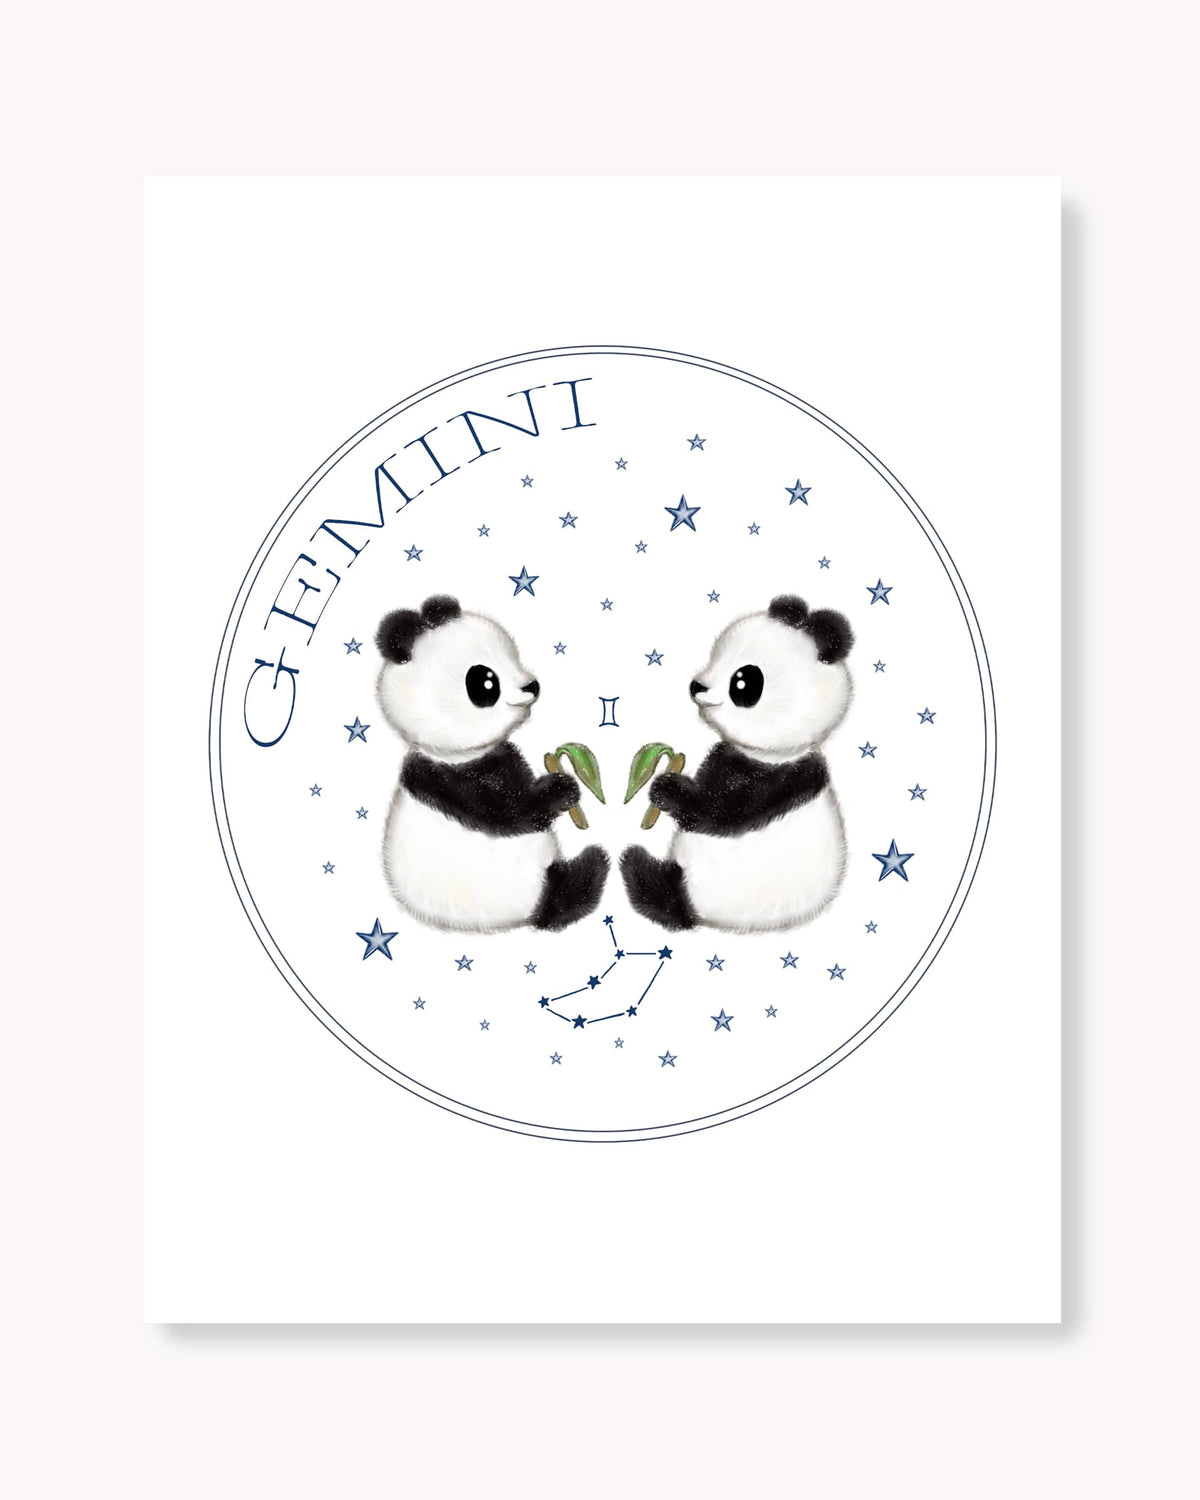 Hand drawn stars zodiac nursery decor wall art poster Gemini cute baby pandas with bamboo